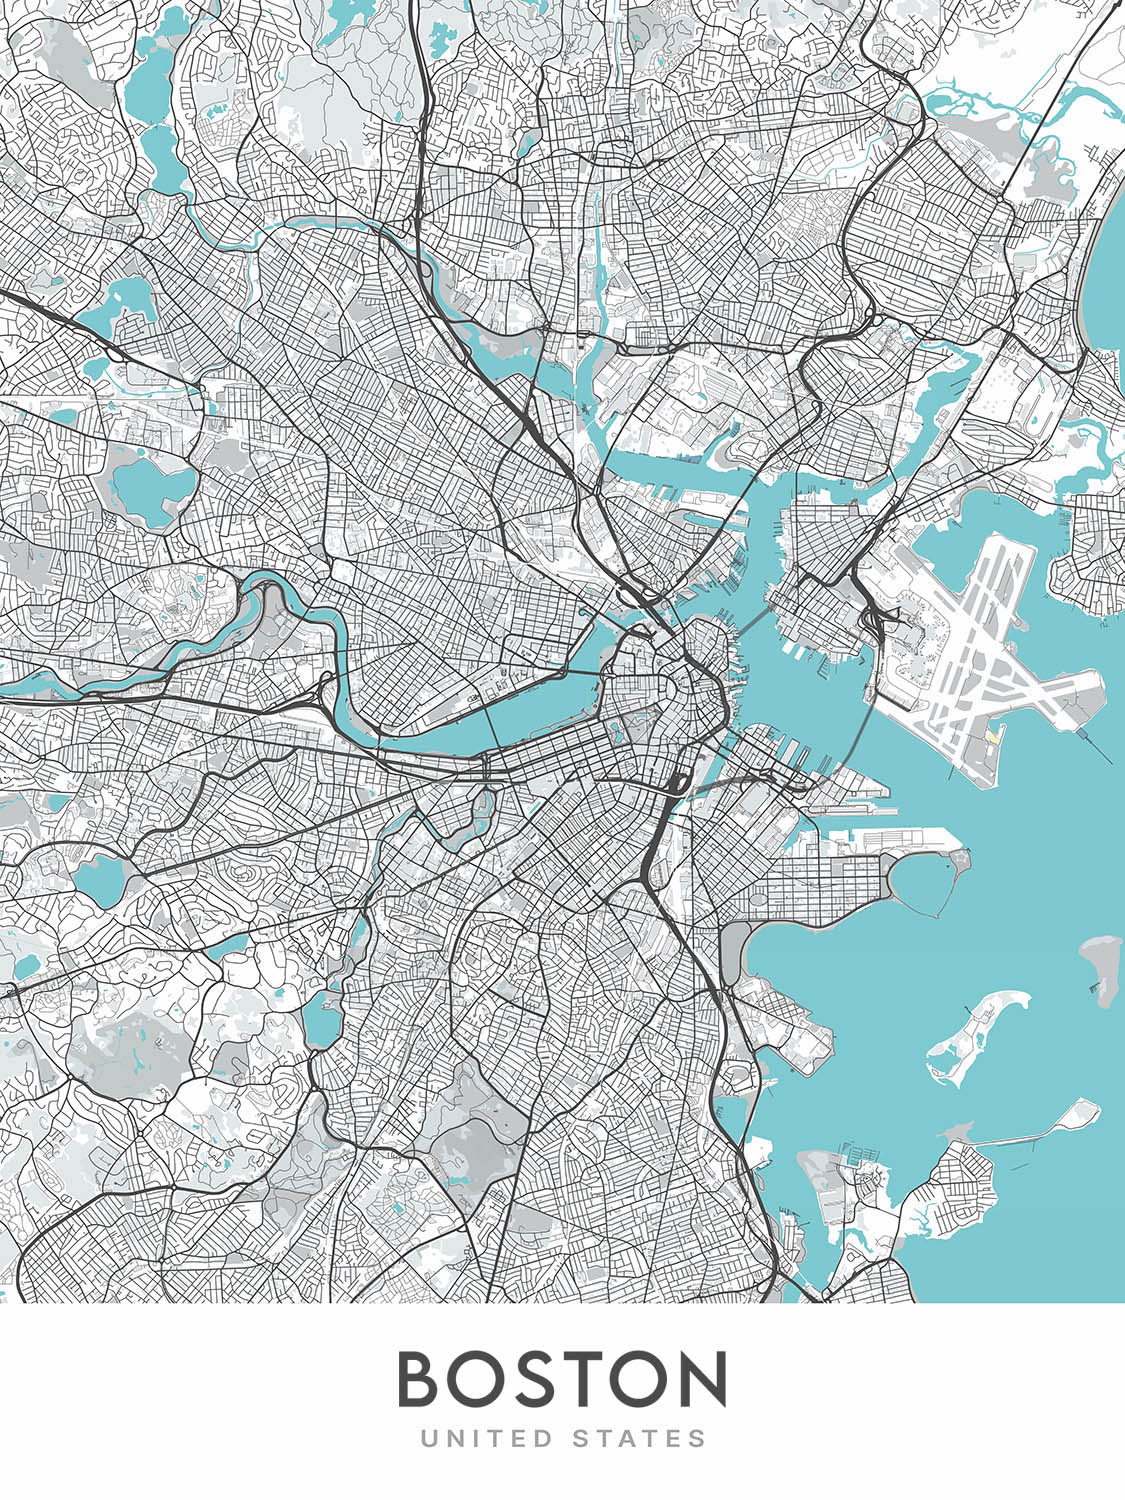 Modern City Map of Boston, MA: Back Bay, Fenway Park, Harvard University, MIT, North End